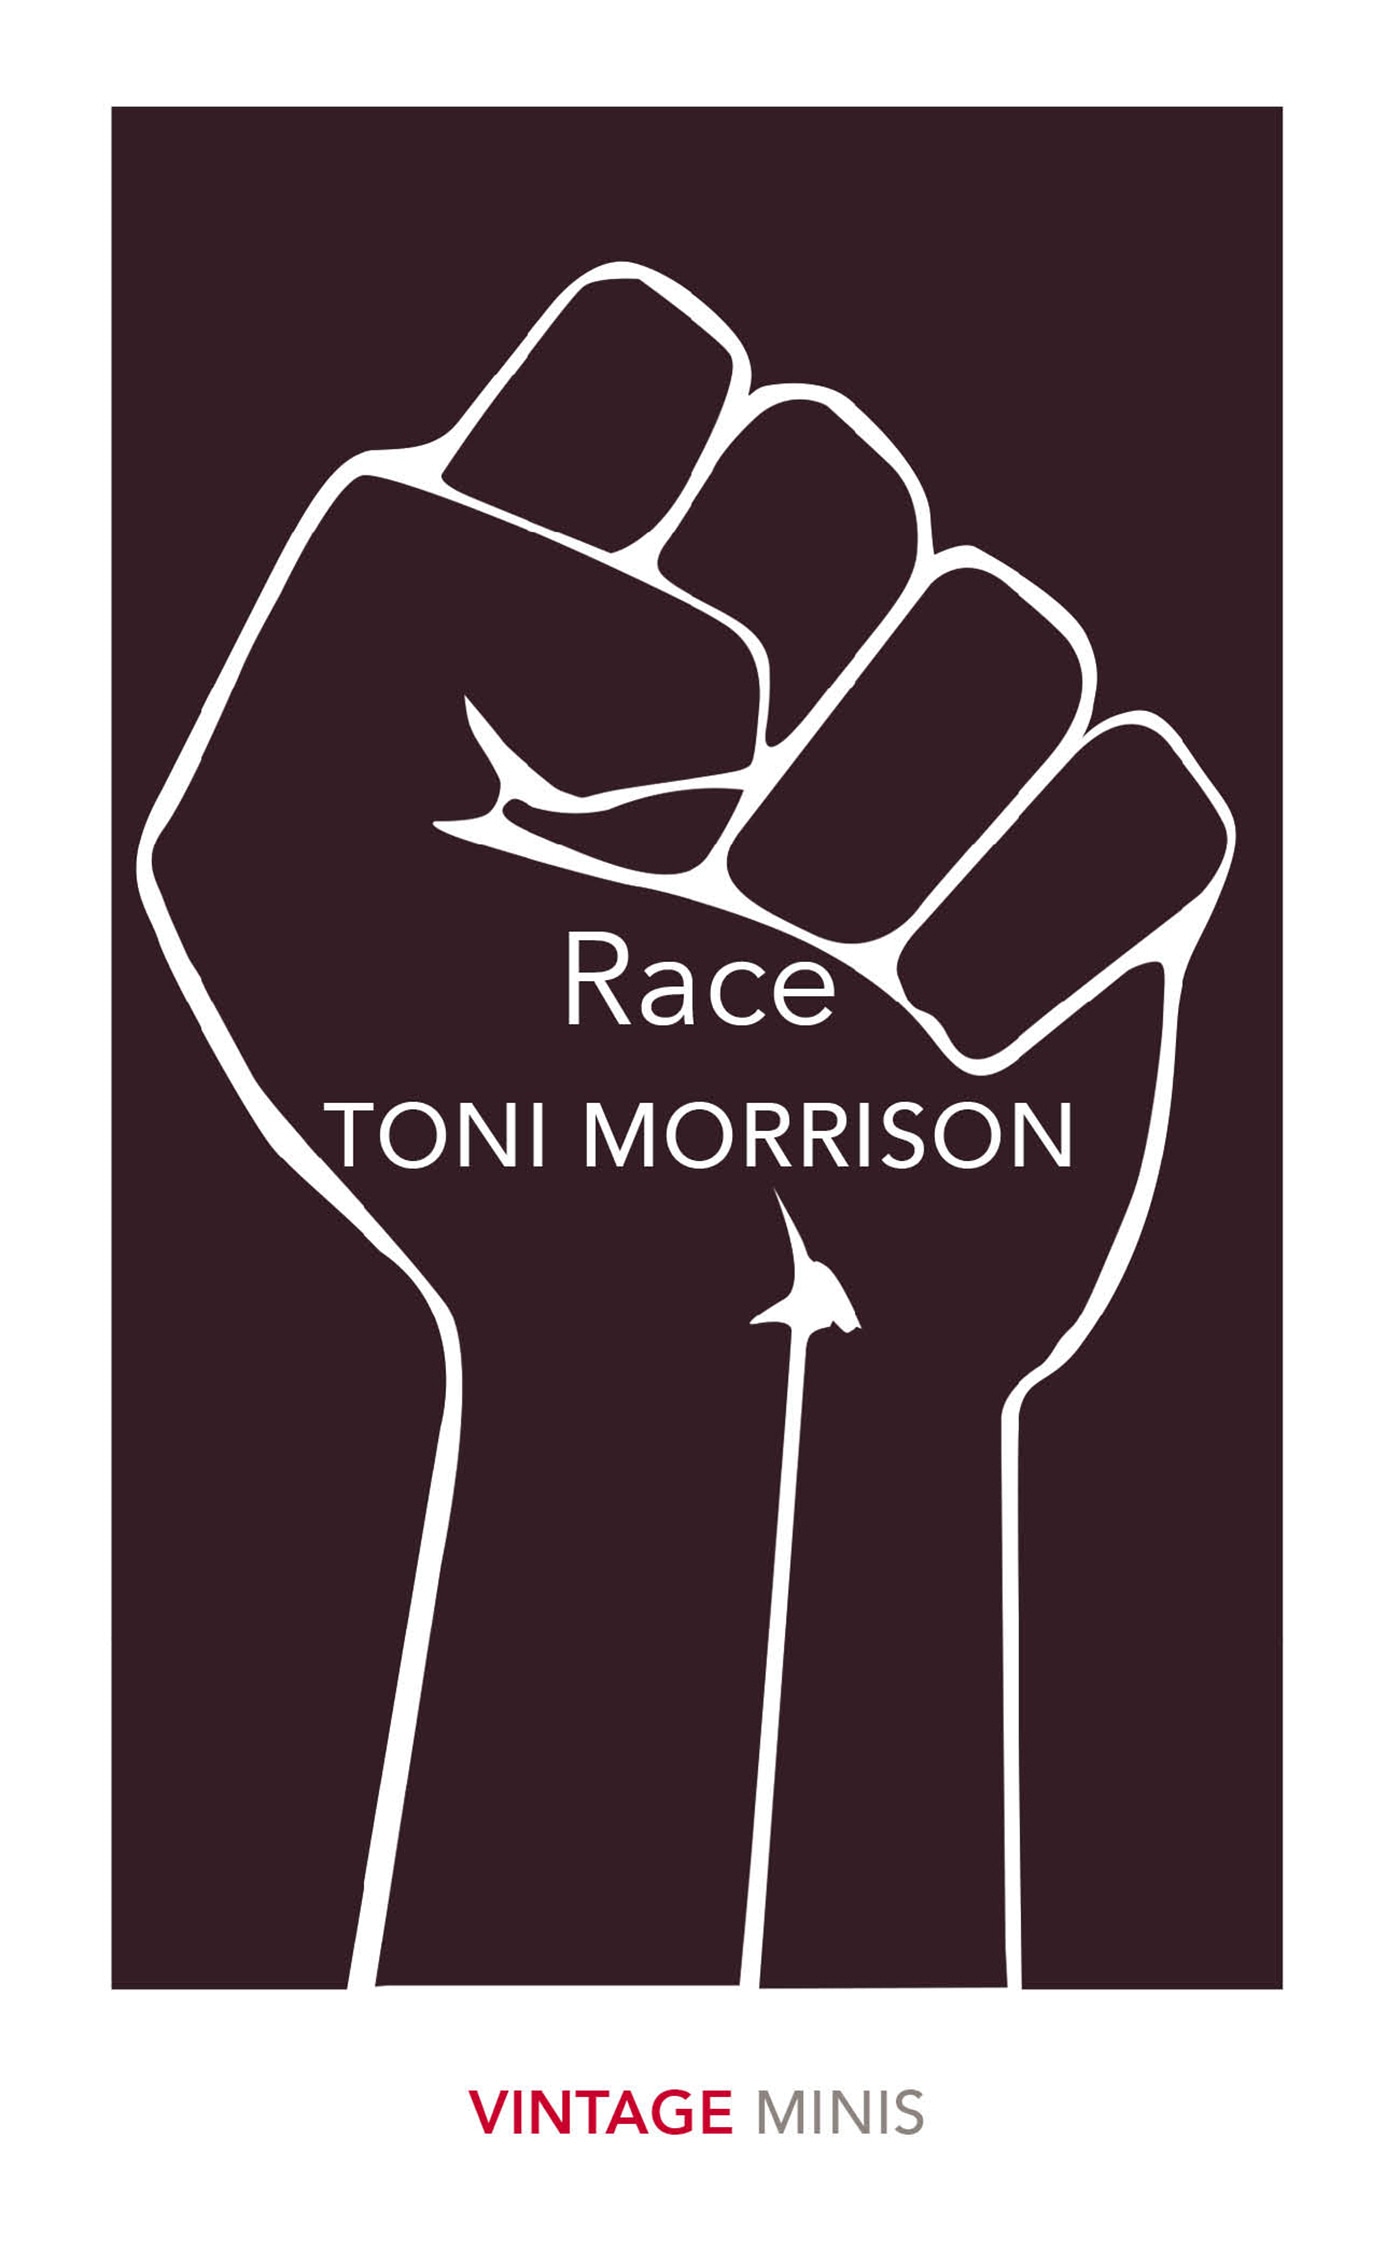 Book “Race” by Toni Morrison — June 8, 2017